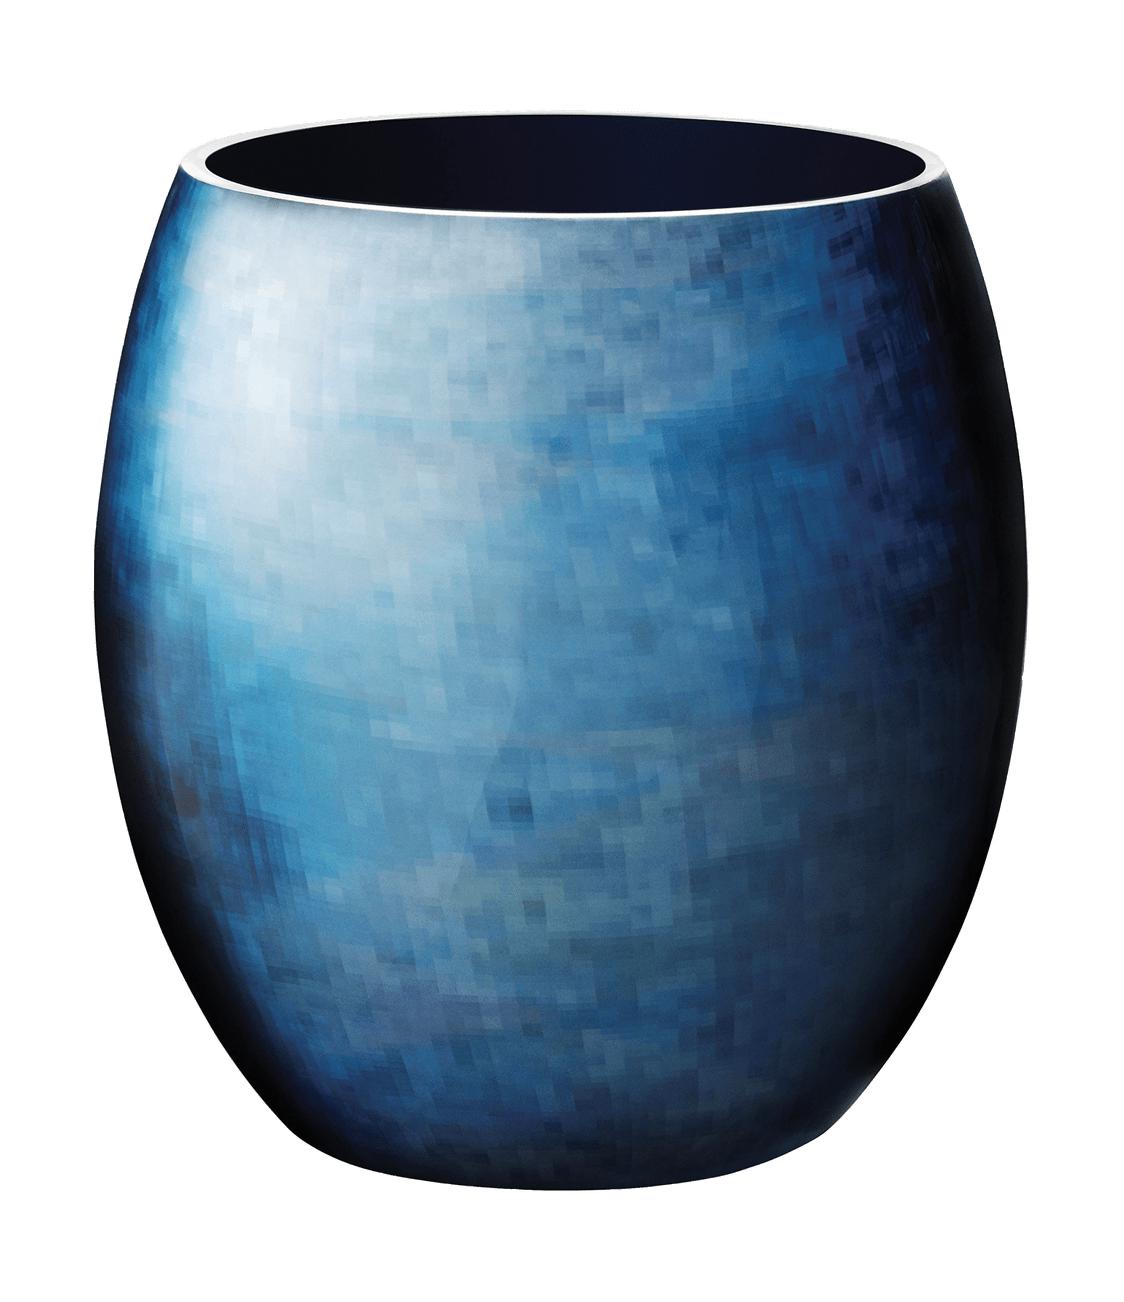 Stelton Stoccolm Vase 19,4 cm, orizzonte